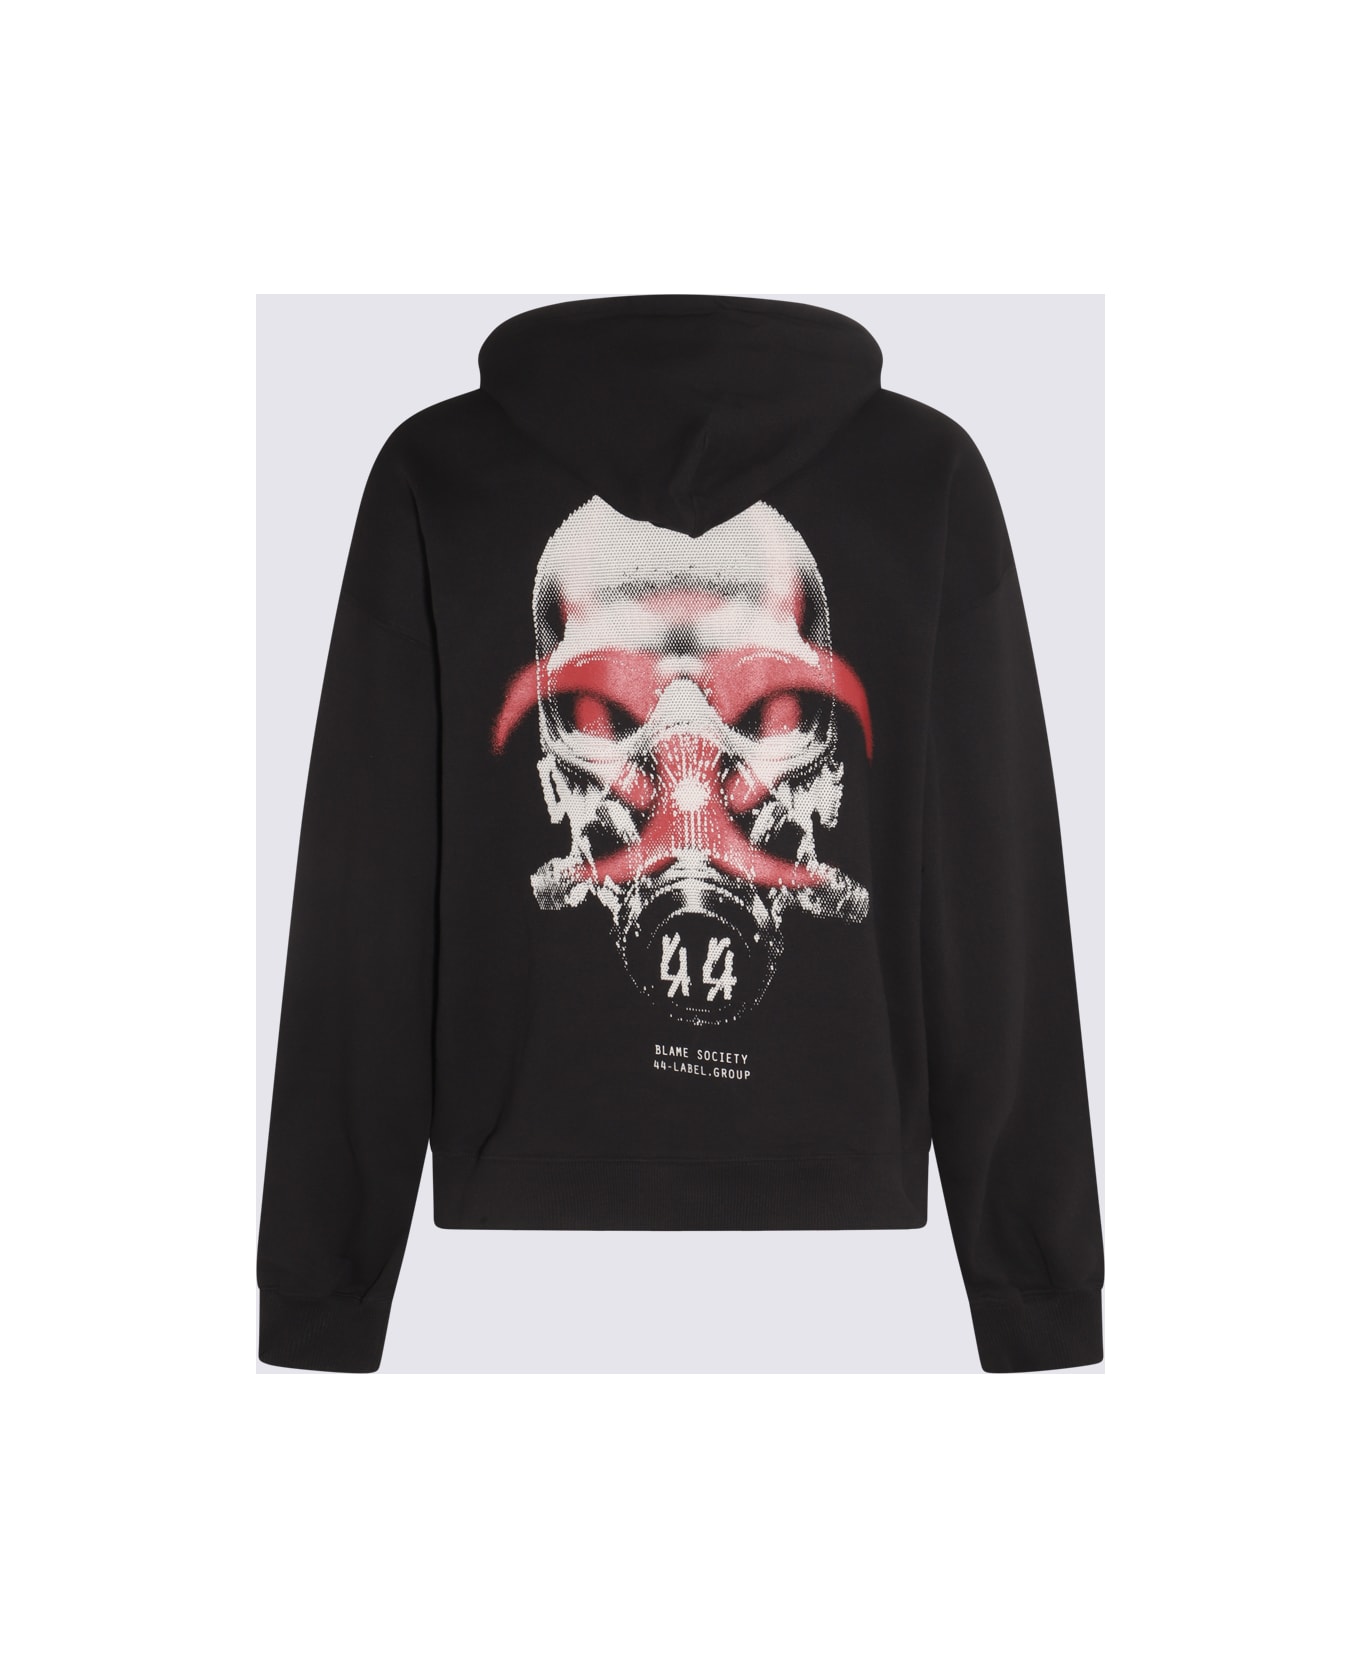 44 Label Group Black, White And Red Cotton Sweatshirt - Black フリース